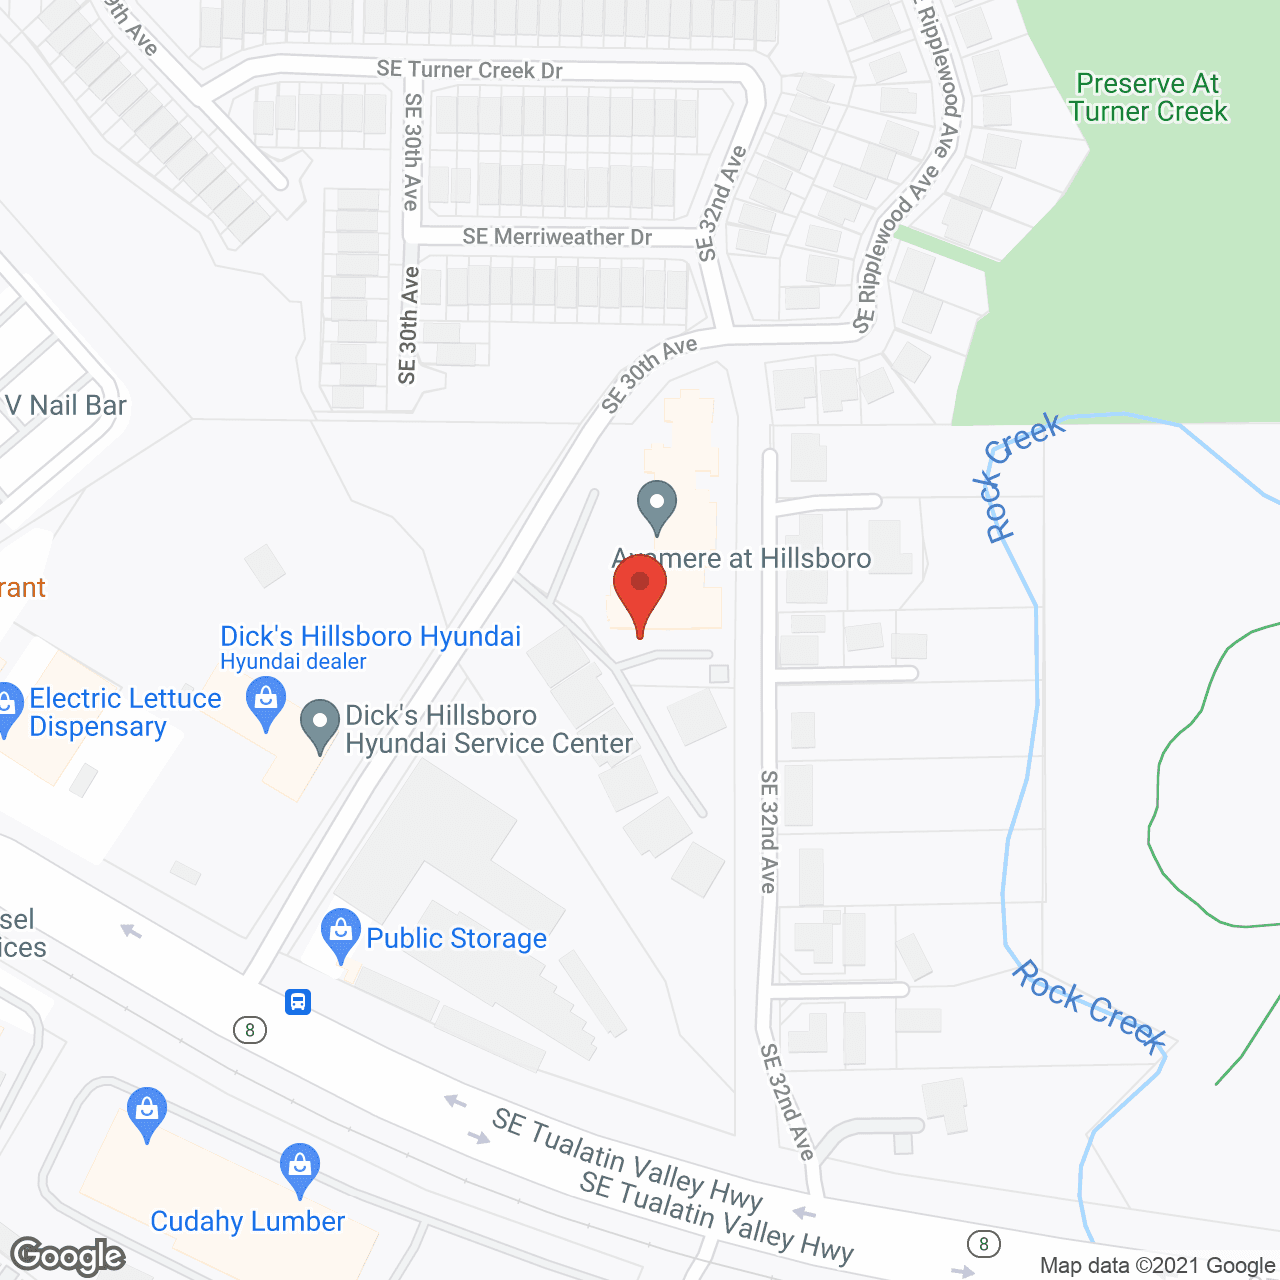 Avamere at Hillsboro in google map